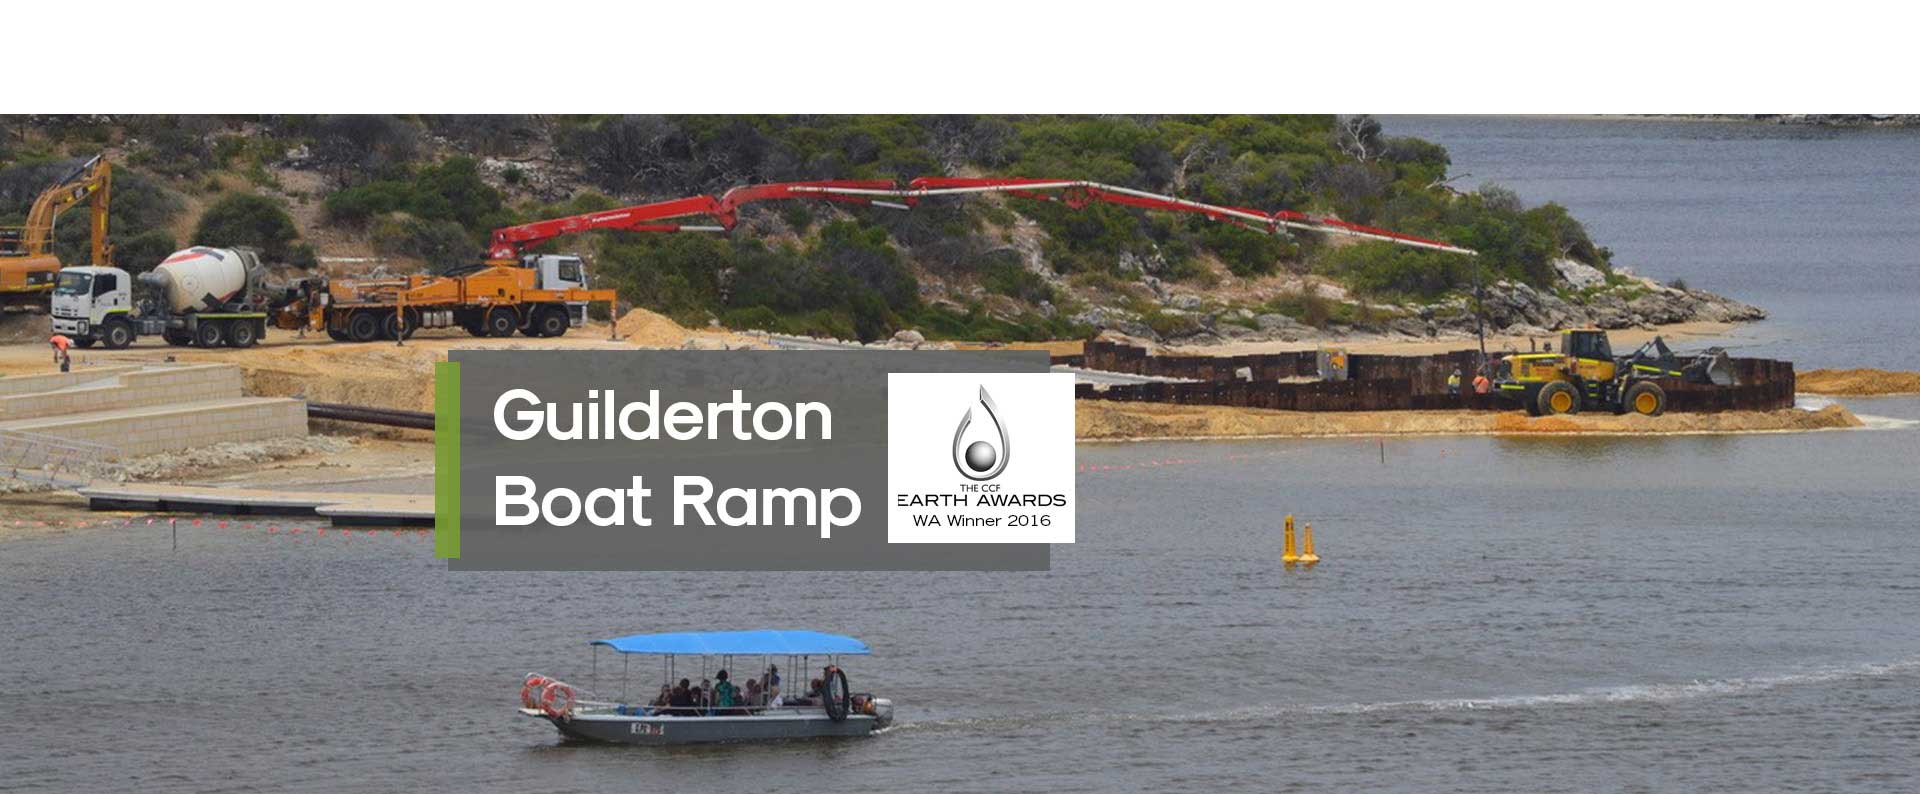 Guilderton Boat Ramp